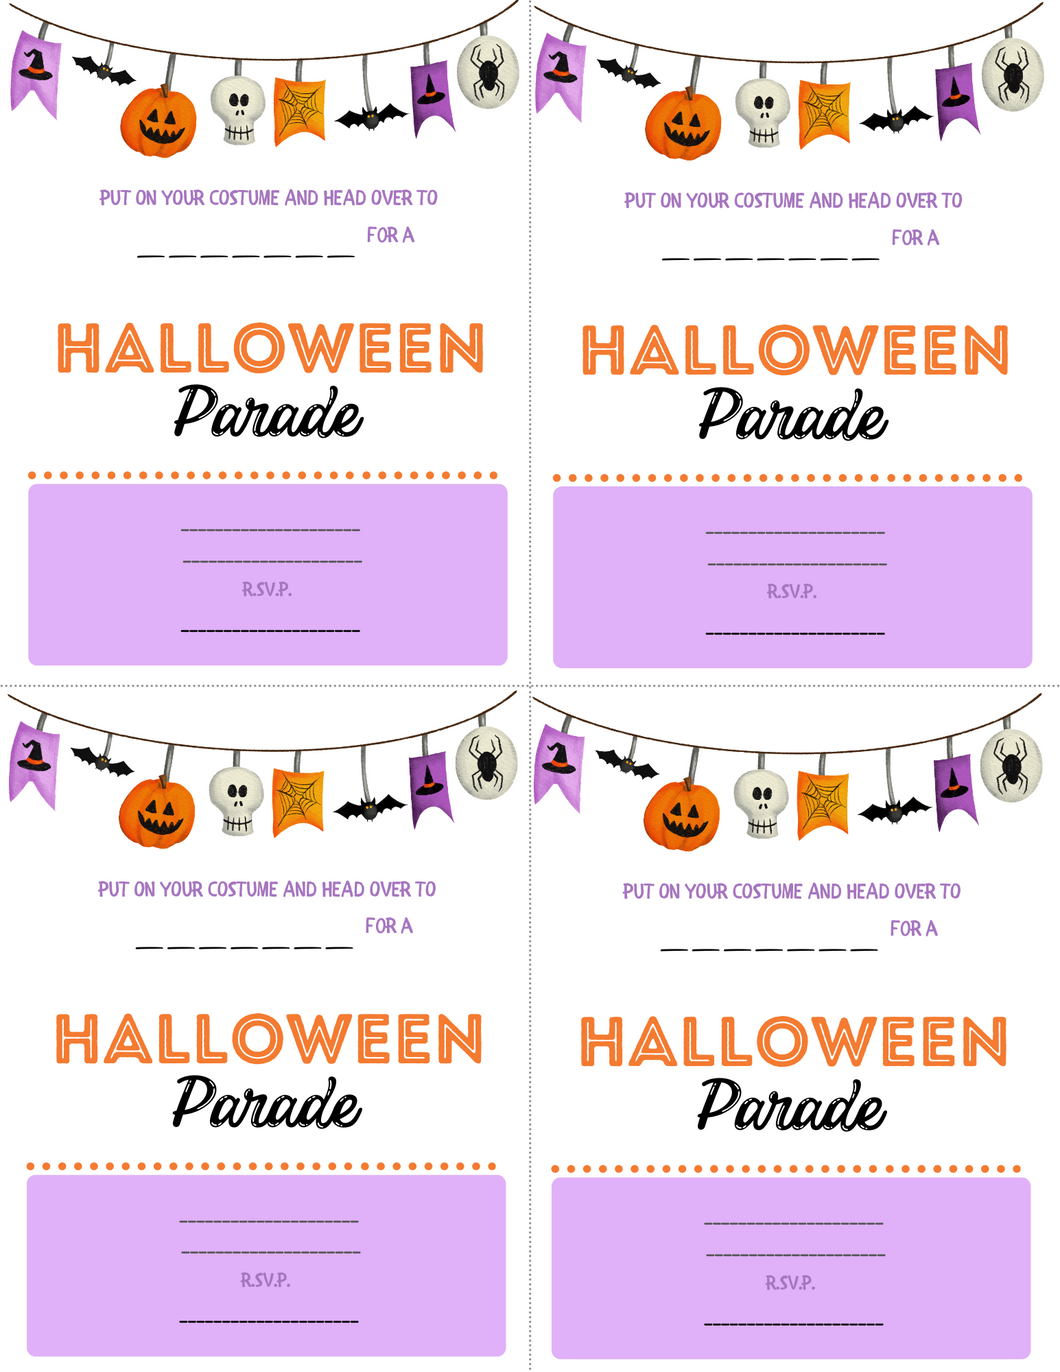 Halloween Parade Invitations